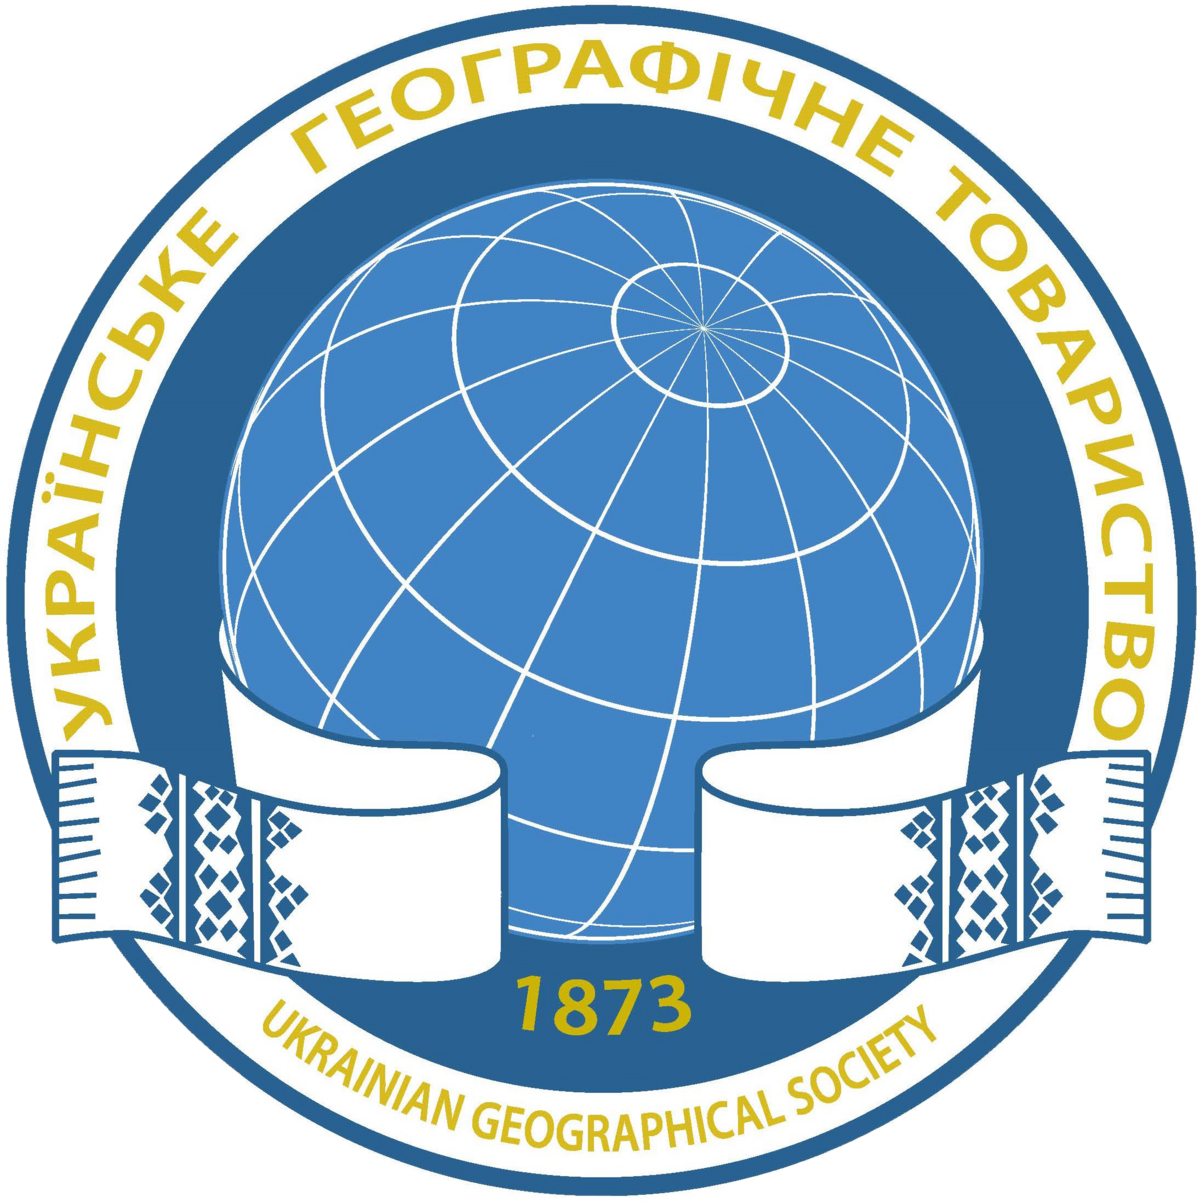 Sumy Department of Ukrainian Geographic Society